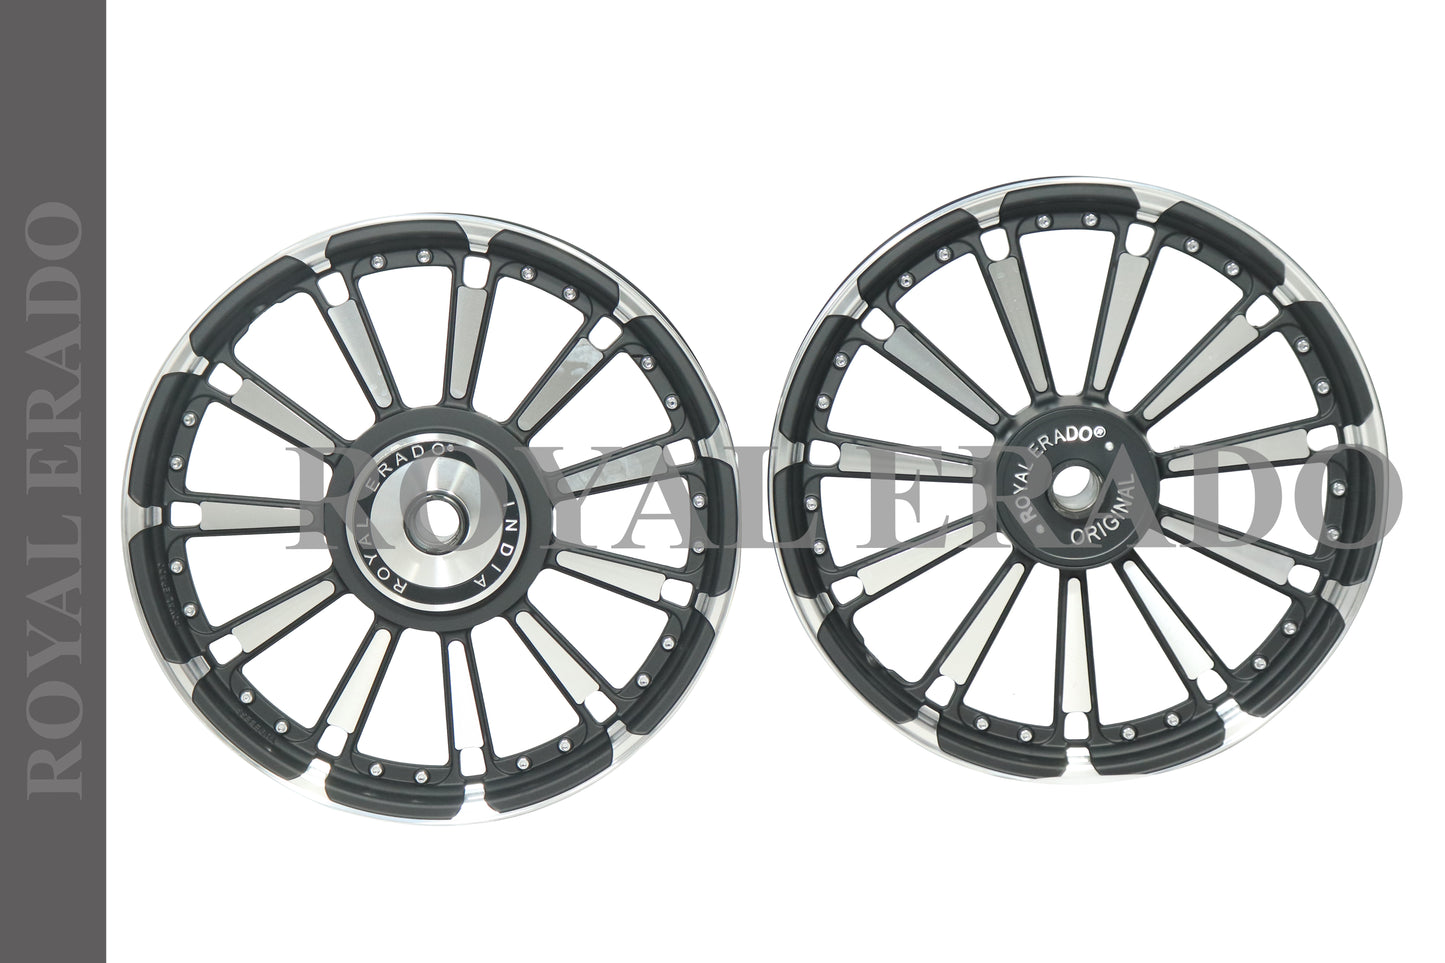 11 SPOKE RAJPUTANA design Alloy Wheel set For Royal-Enfield standard big drum